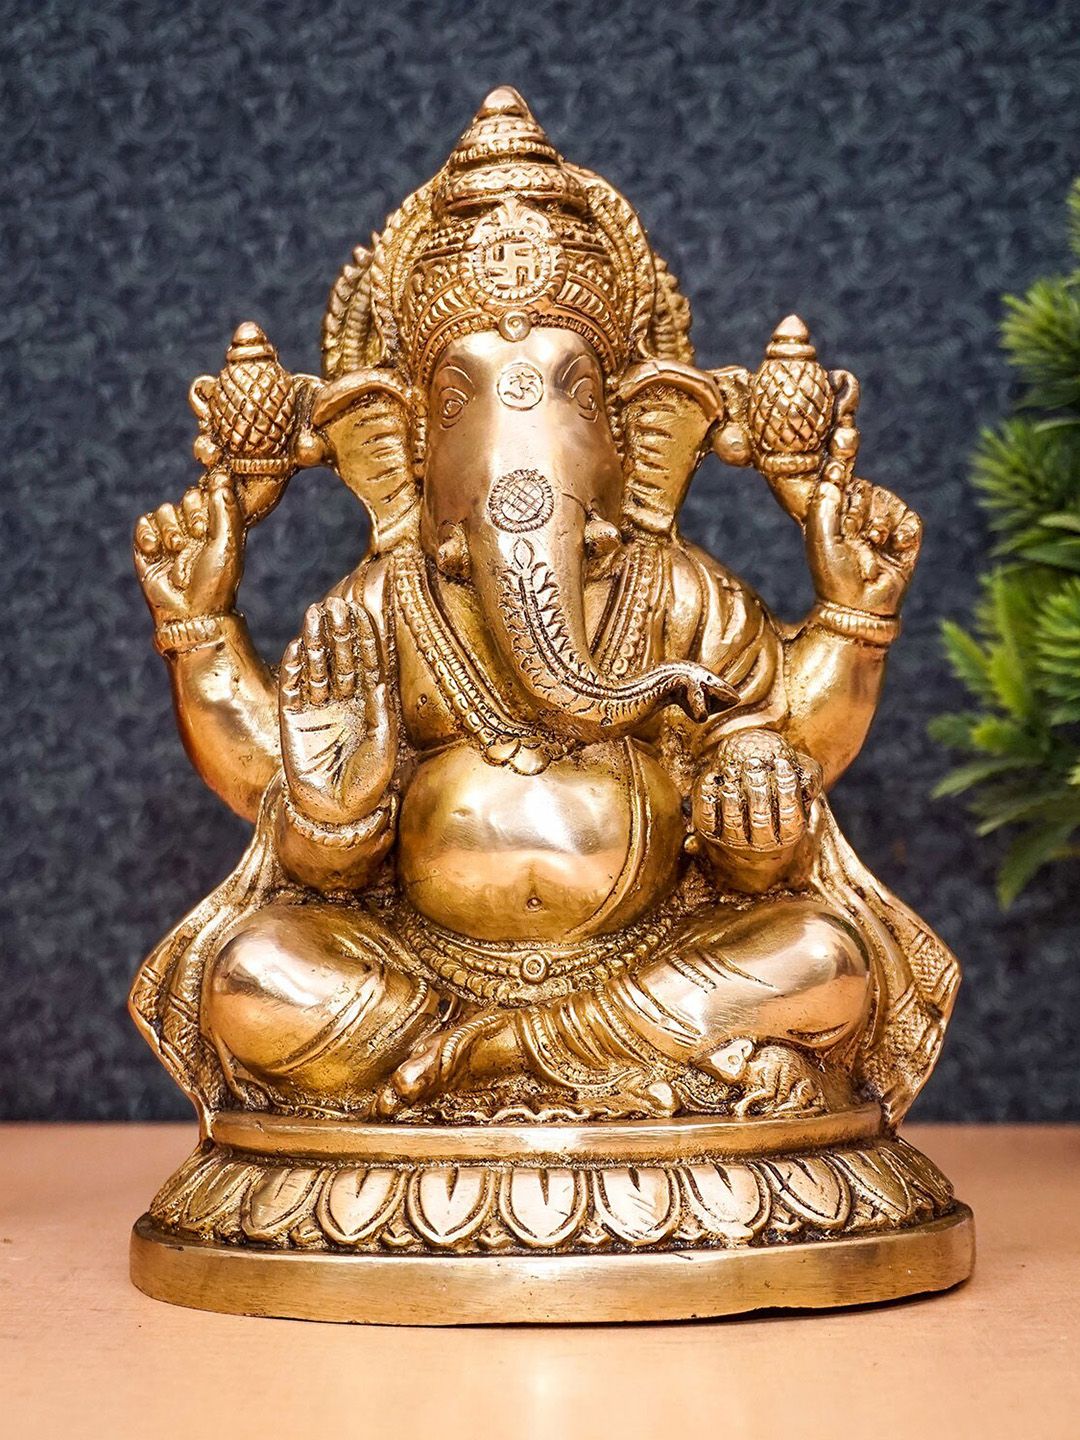 StatueStudio Gold-Toned Brass Ganesha Statue Showpiece Price in India